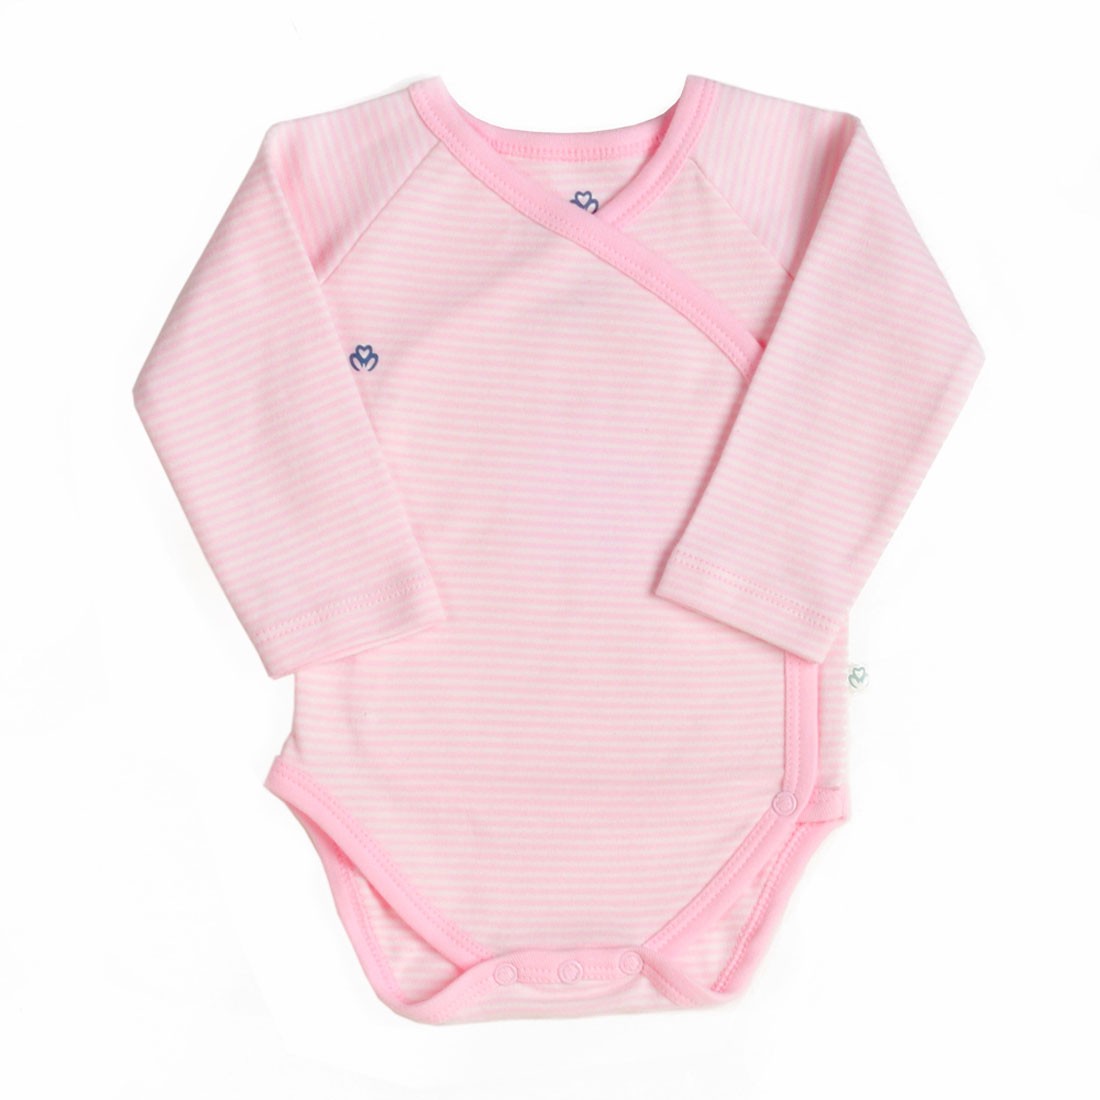 OrganicEra Organic Kimono Baby Bodysuit, Pink